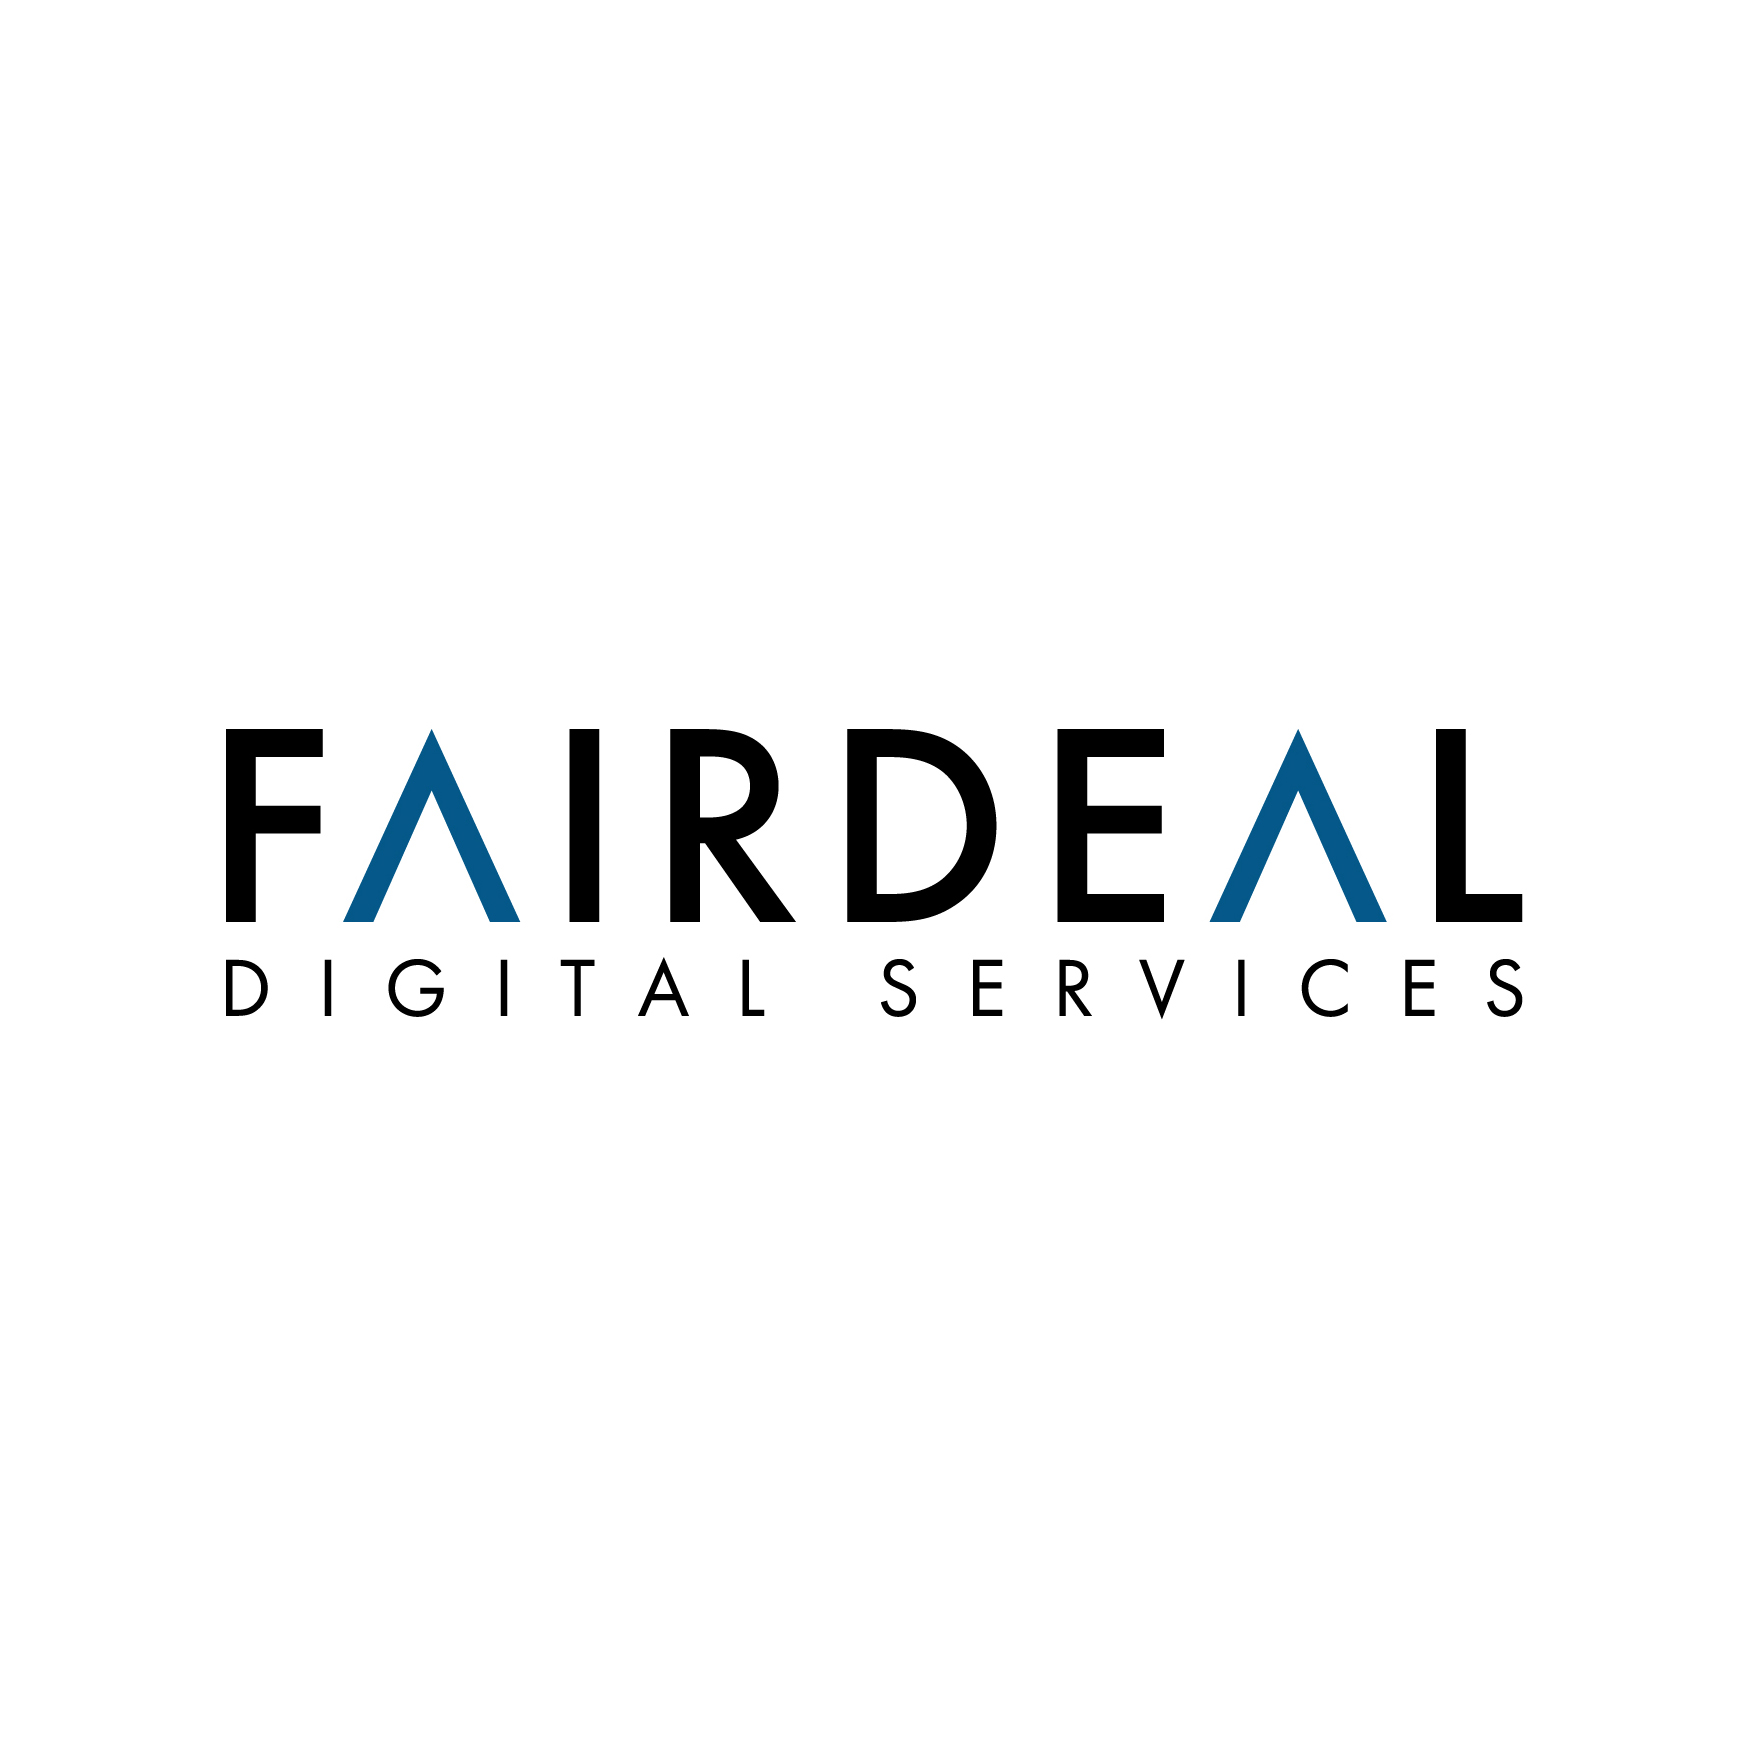 FairDeal Digital Services